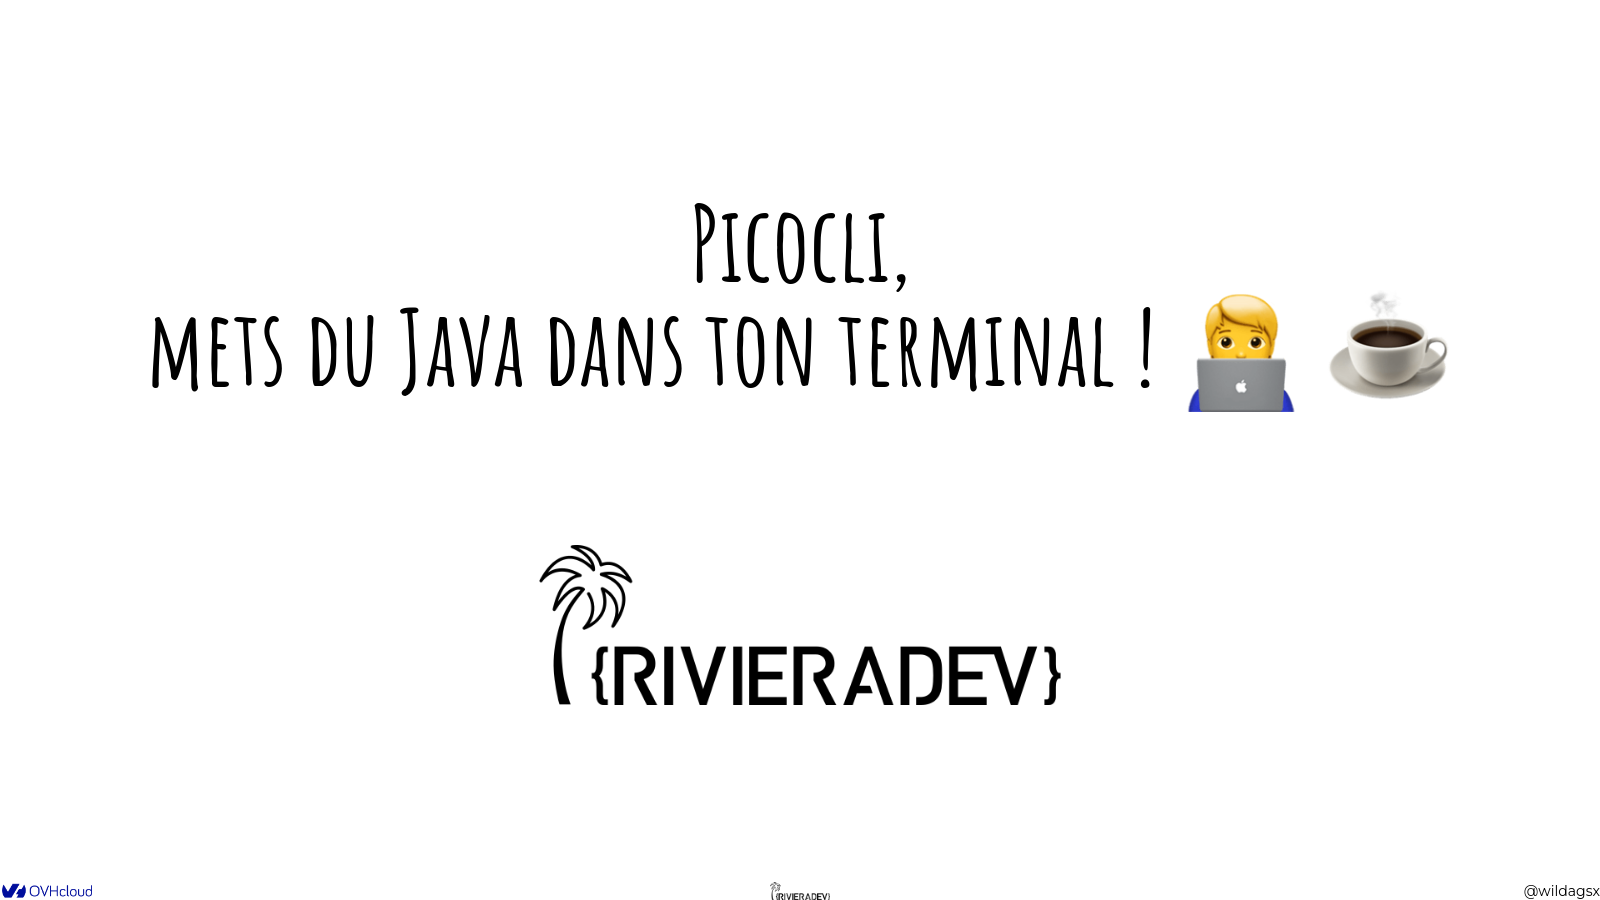 Picocli, mets du Java dans ton terminal !